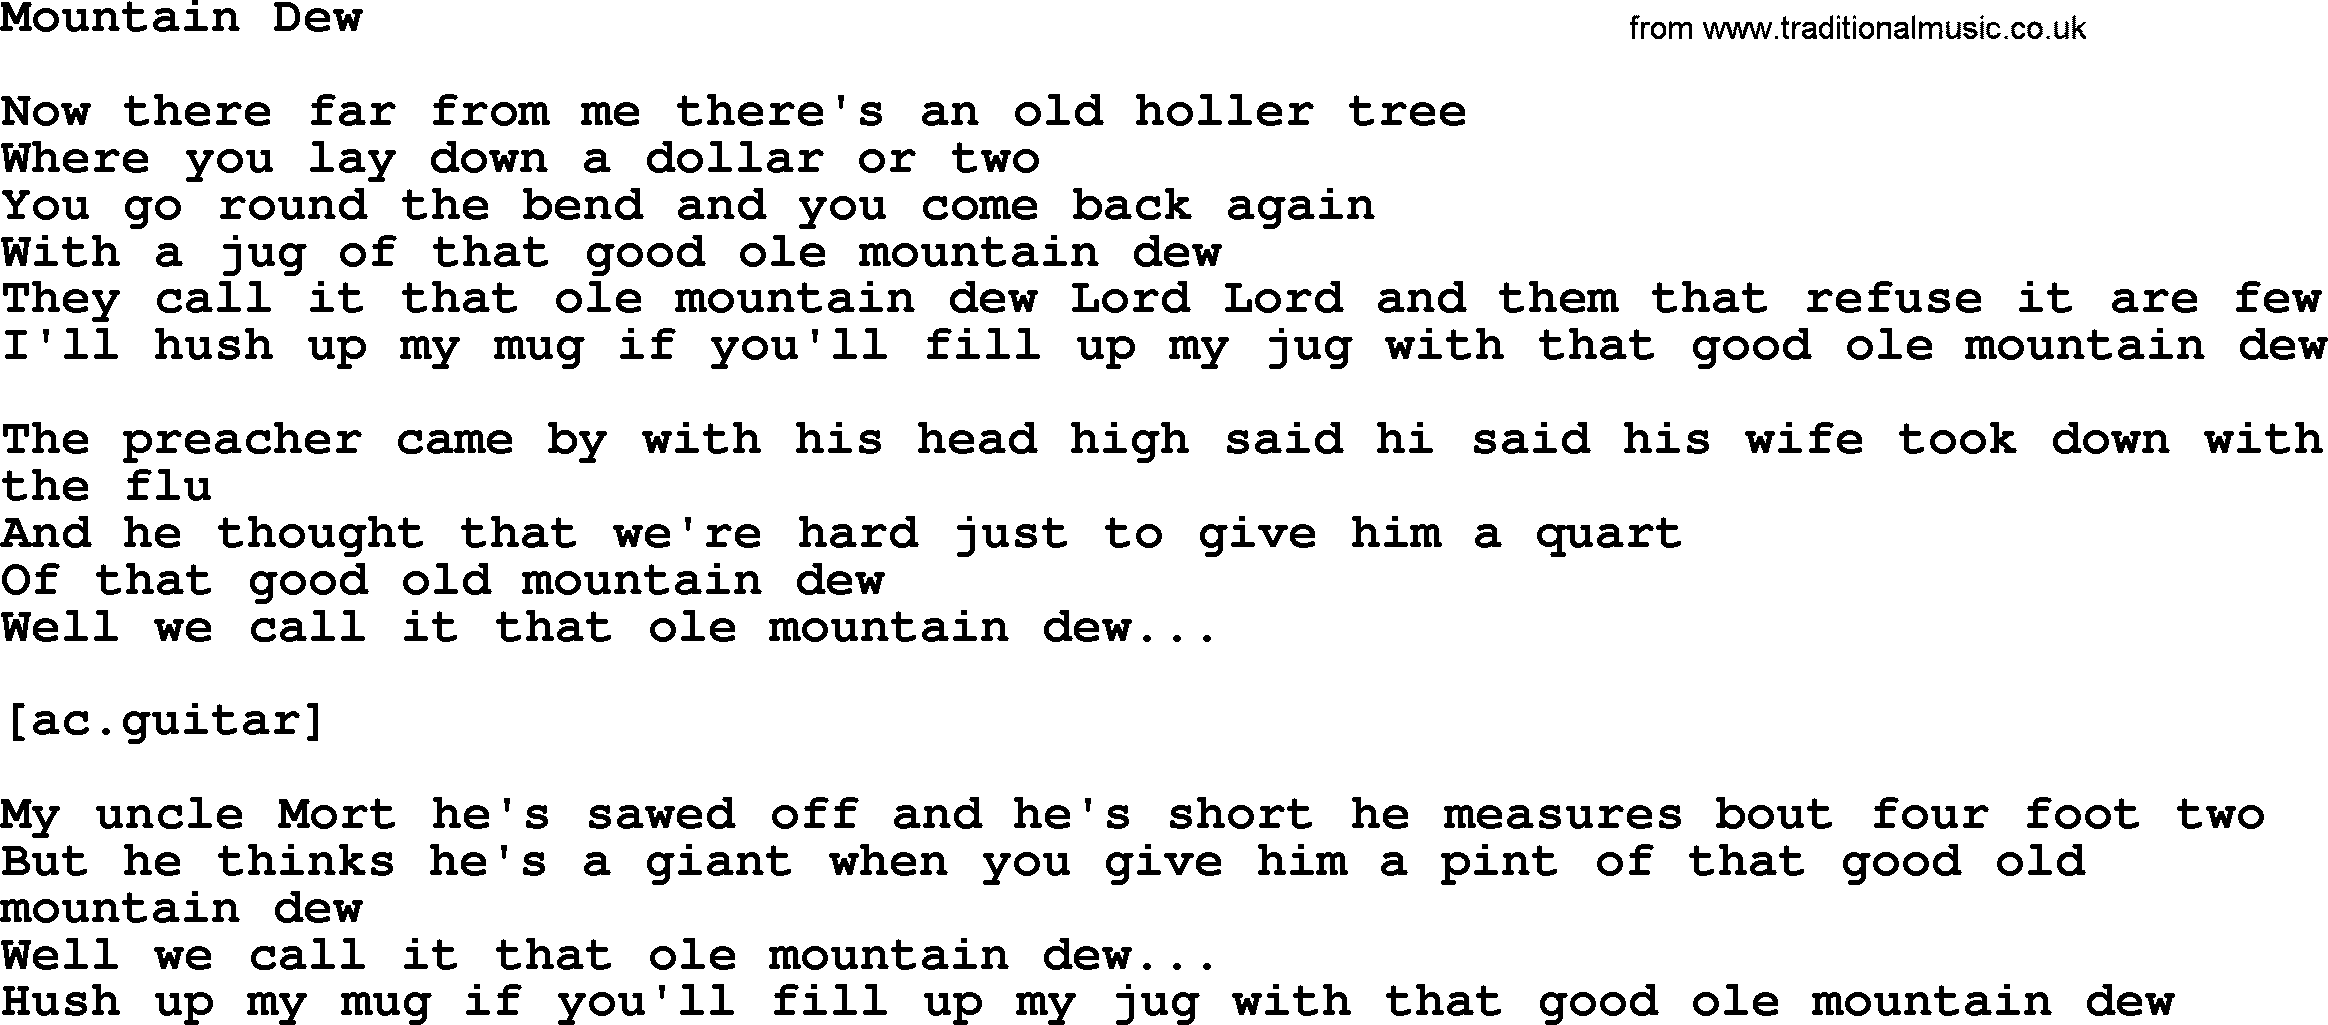 Willie Nelson song: Mountain Dew lyrics